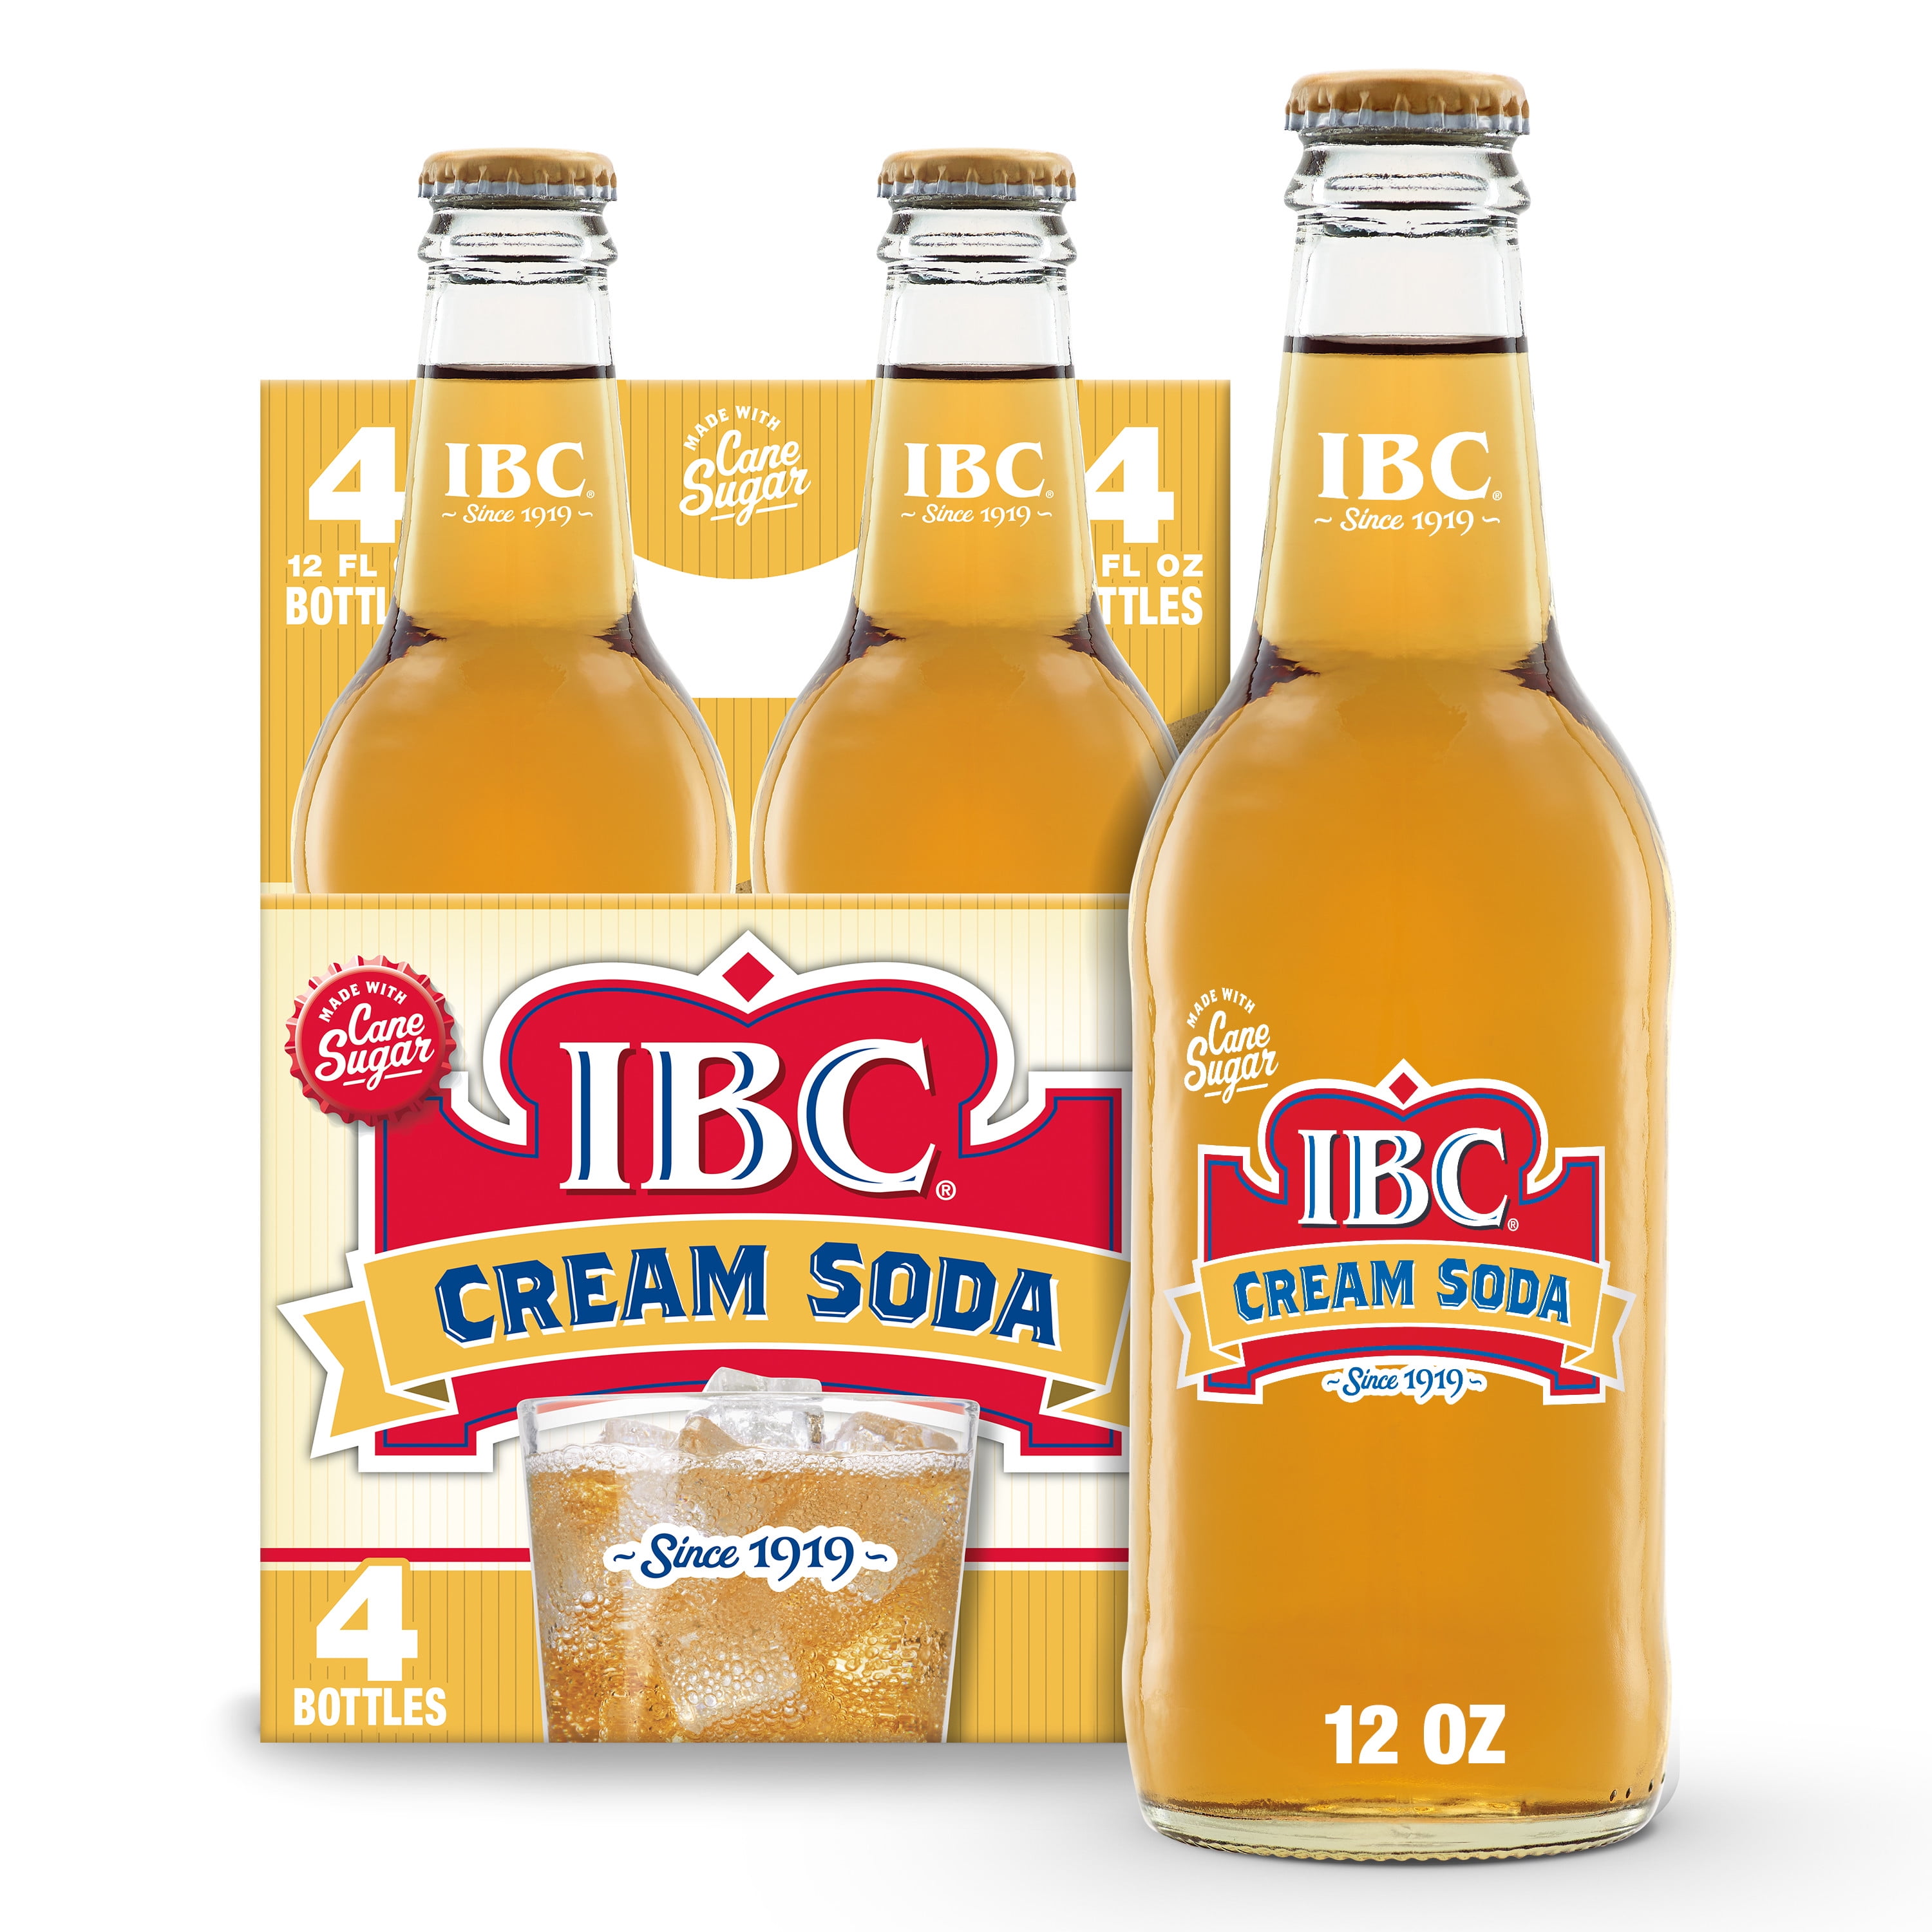 IBC Cream Soda Made with Sugar, Glass Bottles, 12 Fl Oz, 4 Count